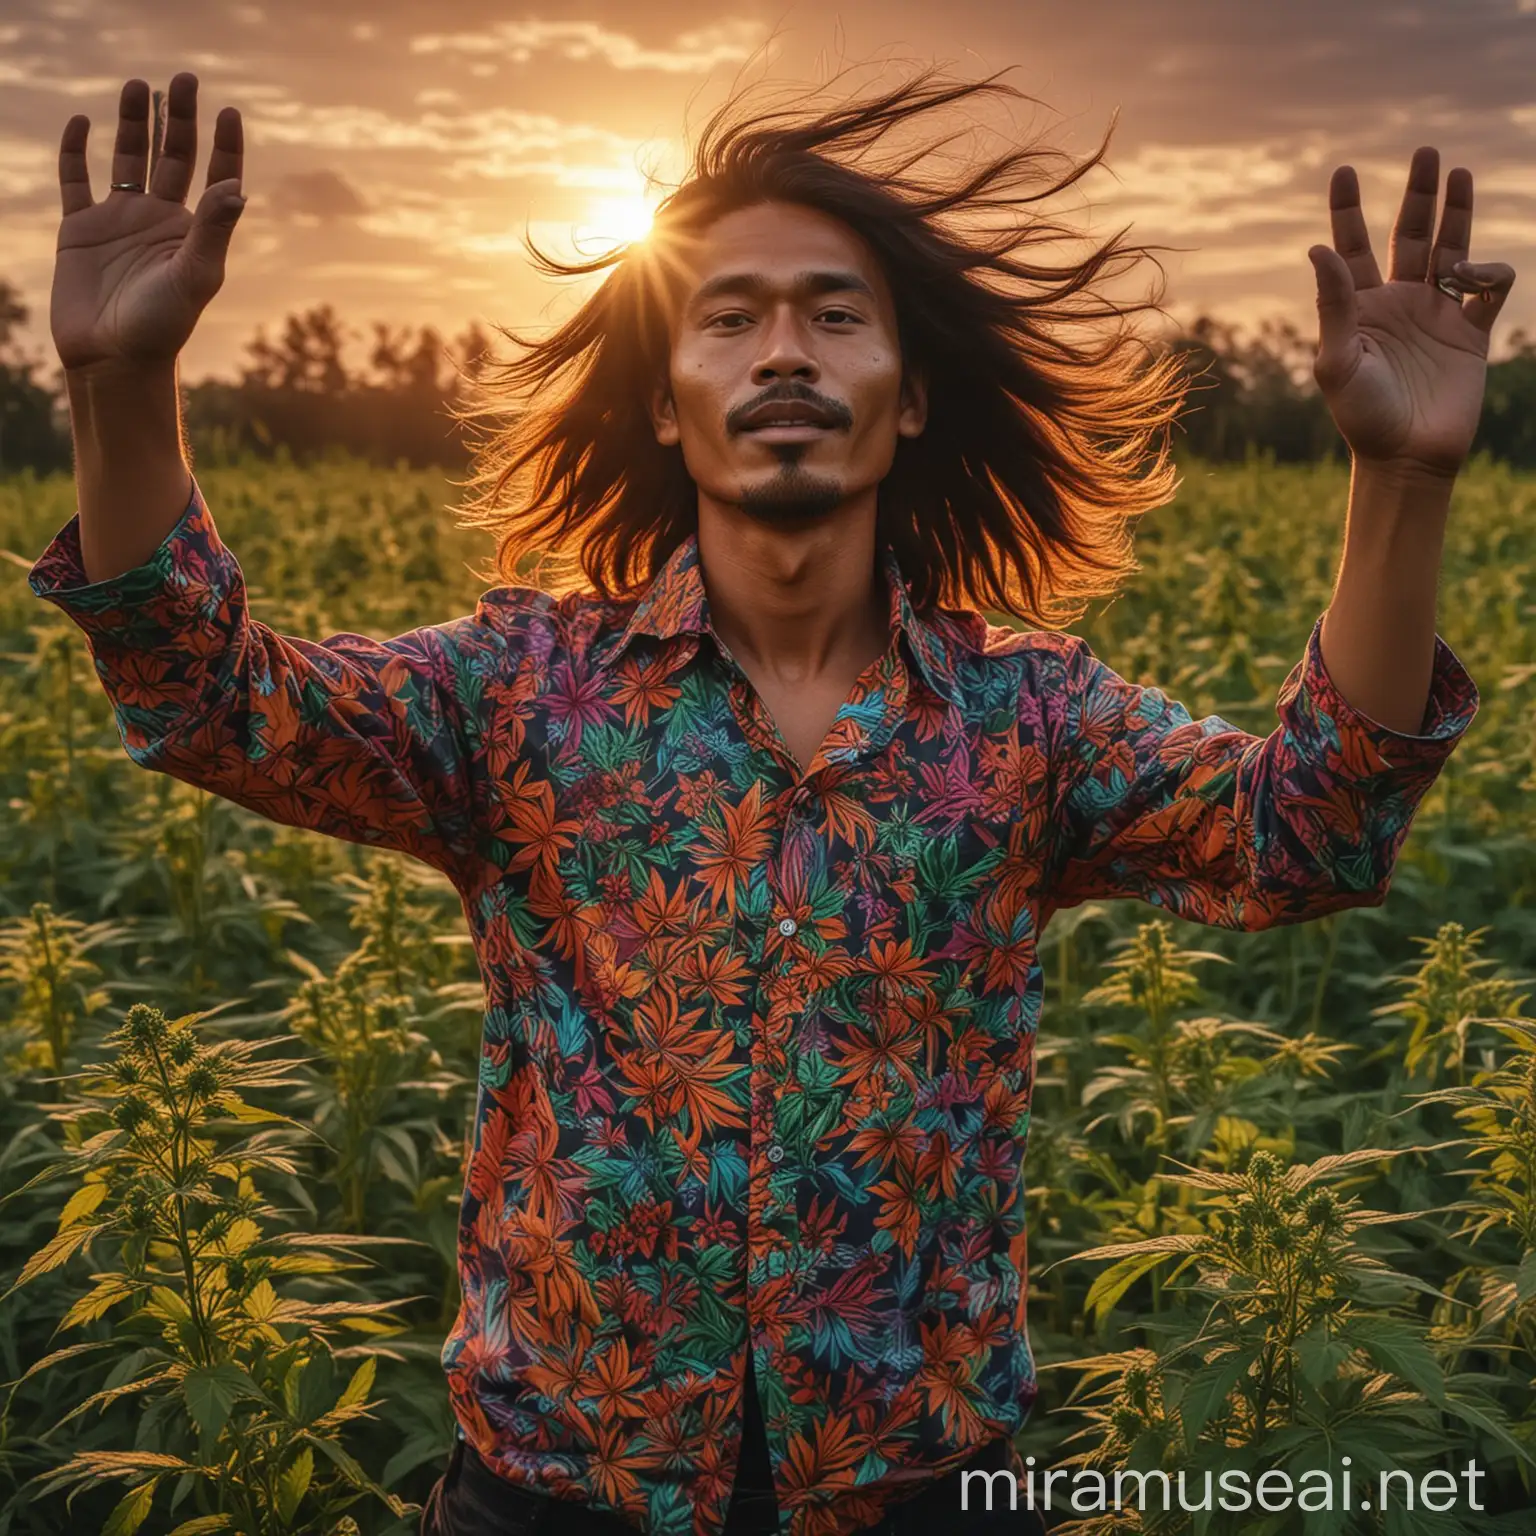 Indonesian Man Standing in Marijuana Field at Sunset